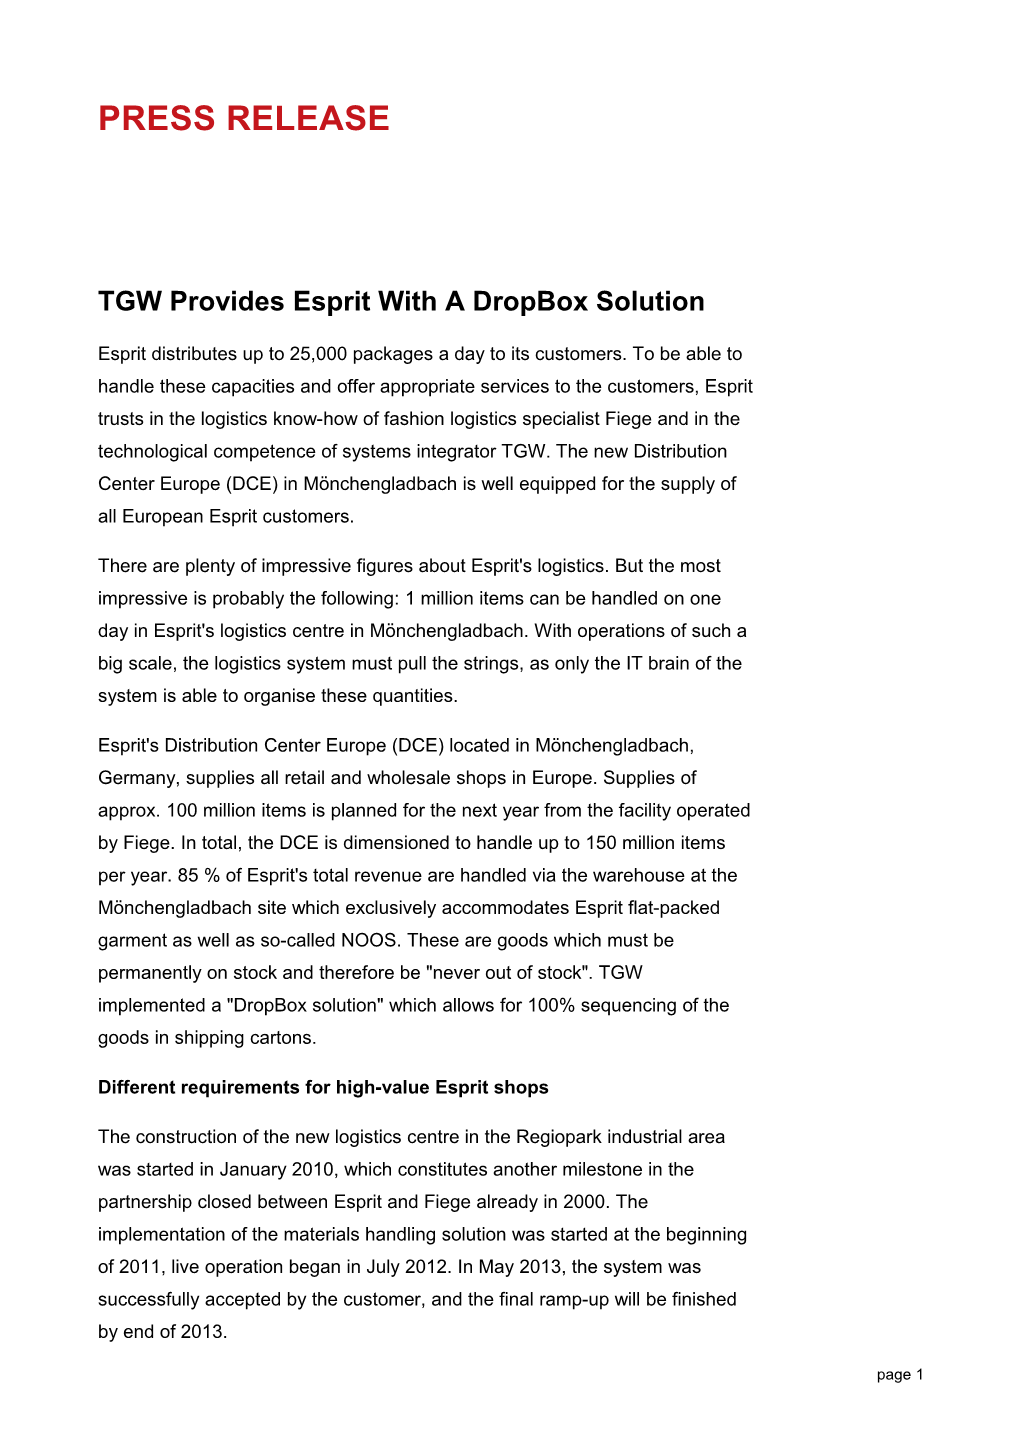 TGW Provides Esprit with a Dropbox Solution